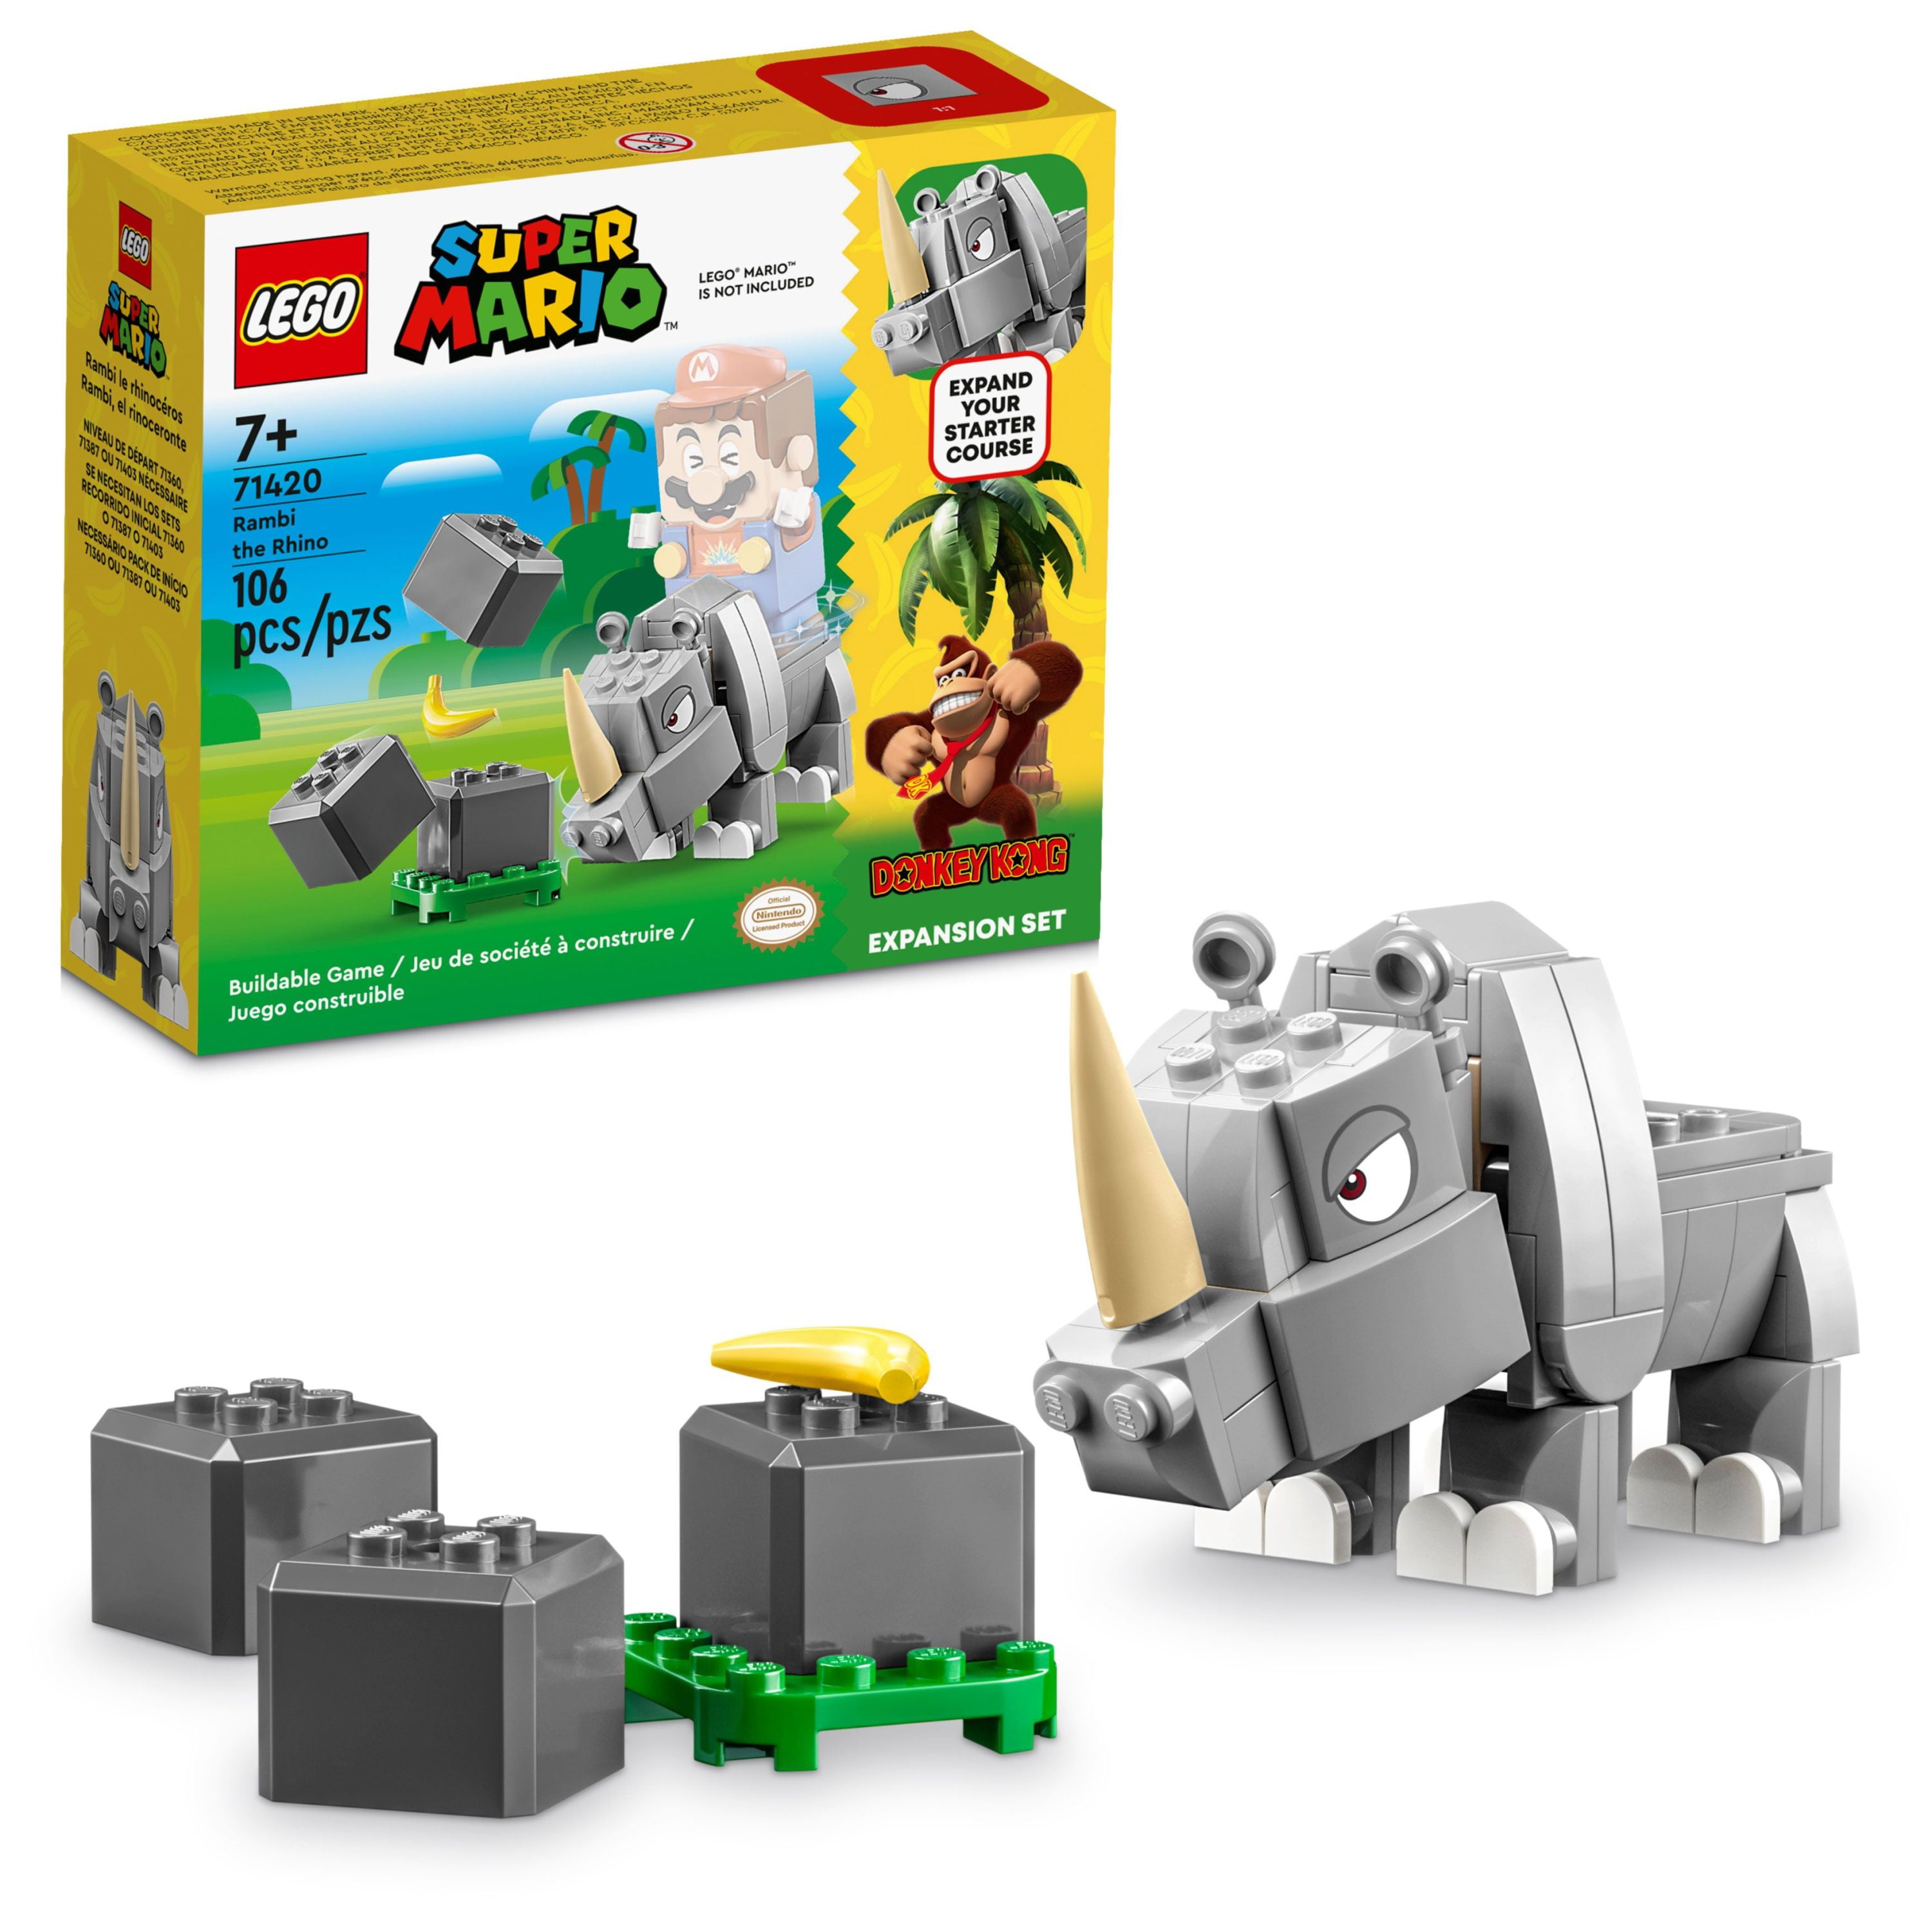 NEW Lego Super Mario WONDER Minifigure Set